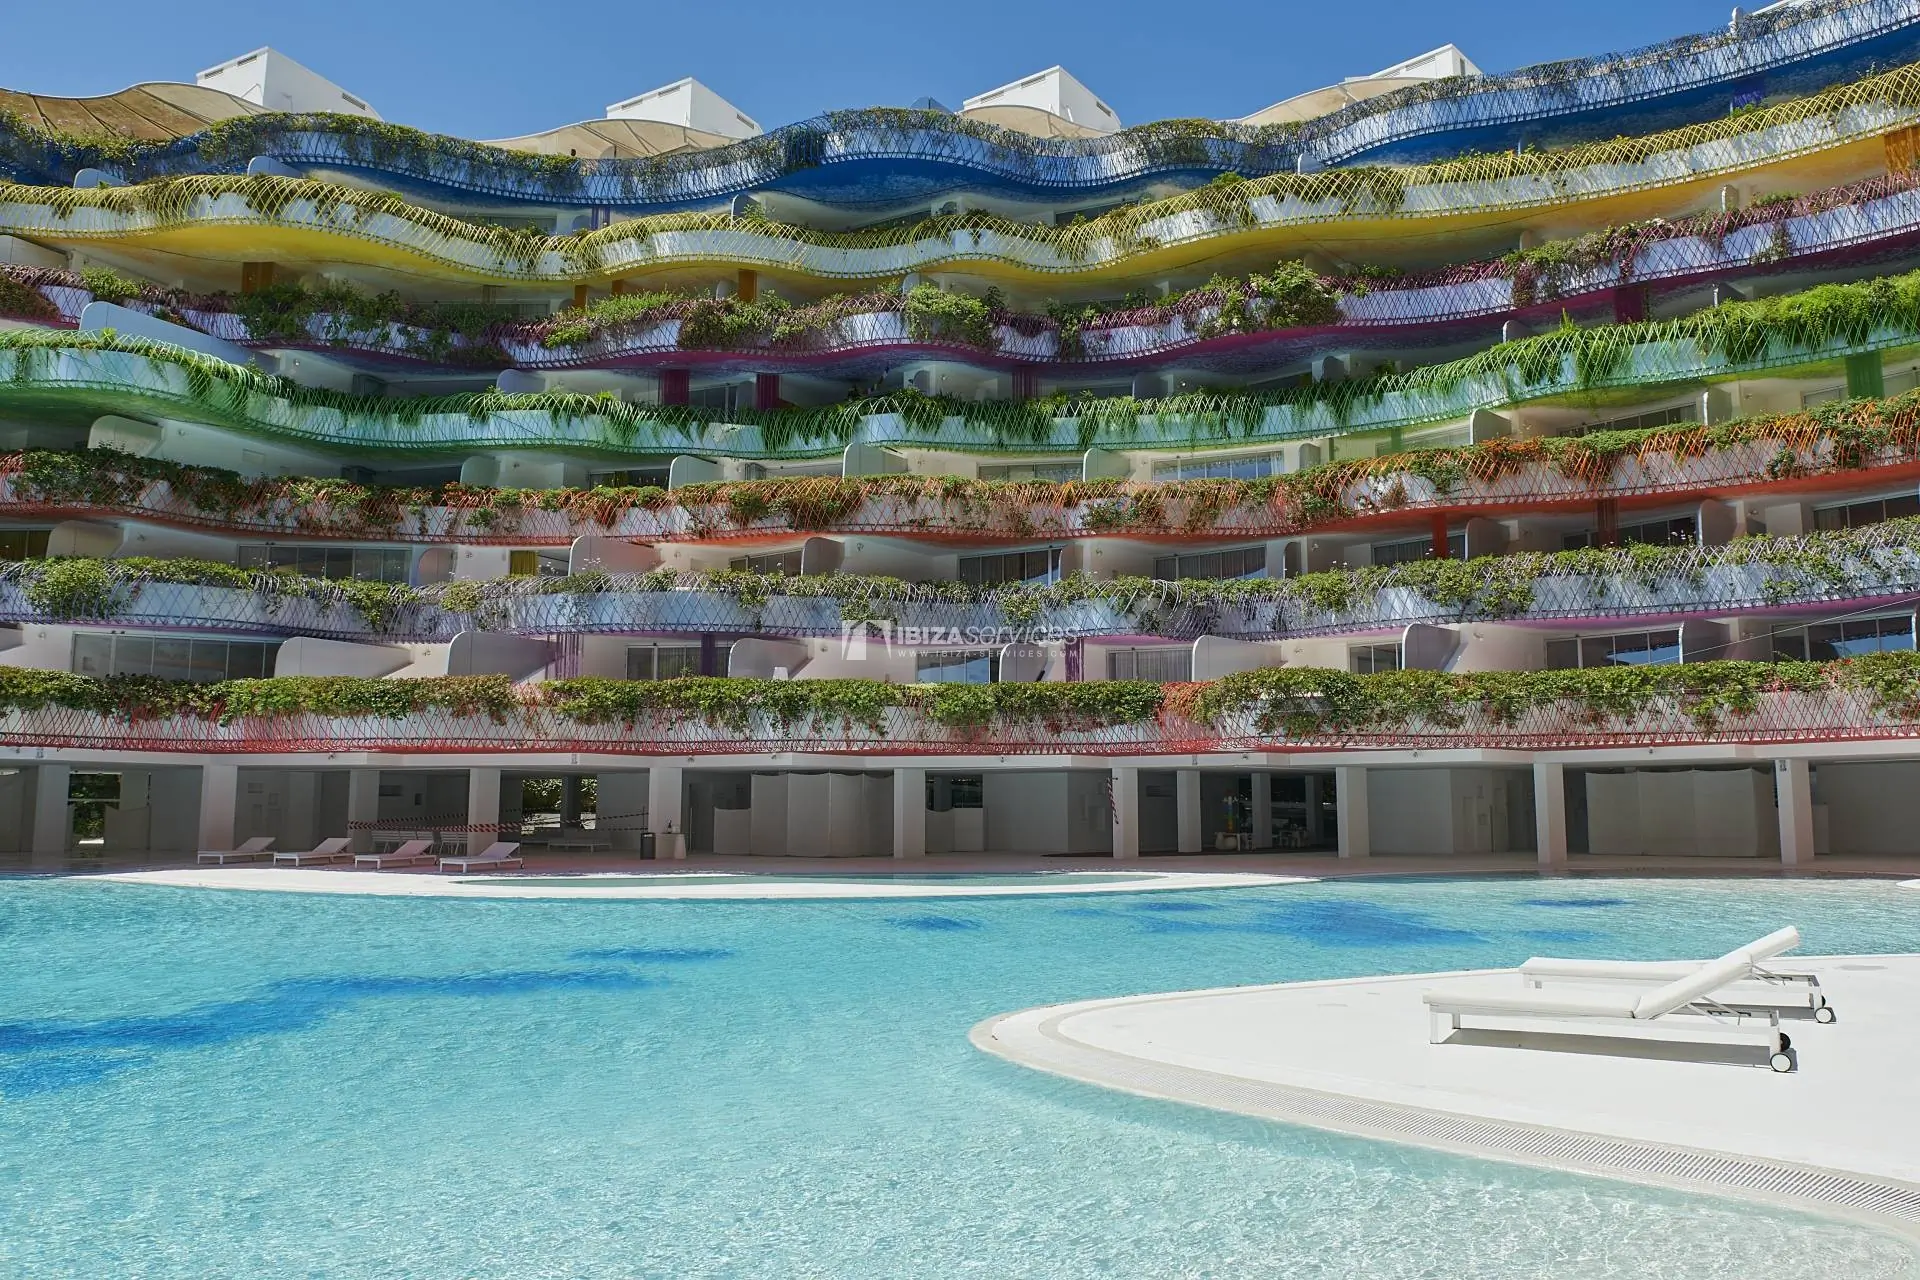 2052 Las Boas de Ibiza location d’un appartement de luxe de 1 chambre.